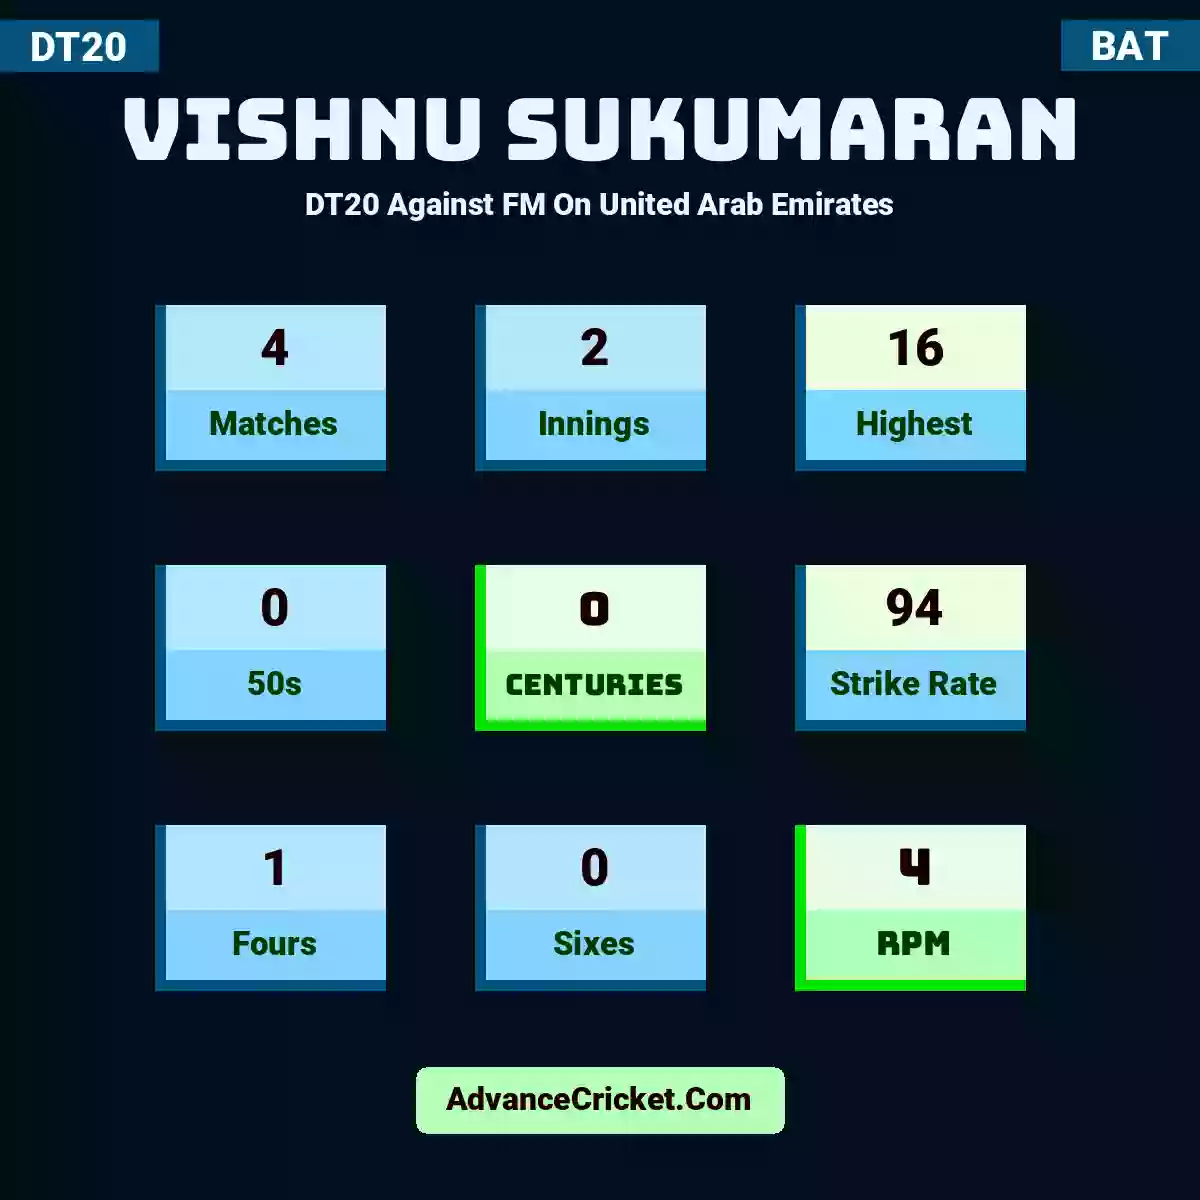 Vishnu Sukumaran DT20  Against FM On United Arab Emirates, Vishnu Sukumaran played 4 matches, scored 16 runs as highest, 0 half-centuries, and 0 centuries, with a strike rate of 94. V.Sukumaran hit 1 fours and 0 sixes, with an RPM of 4.